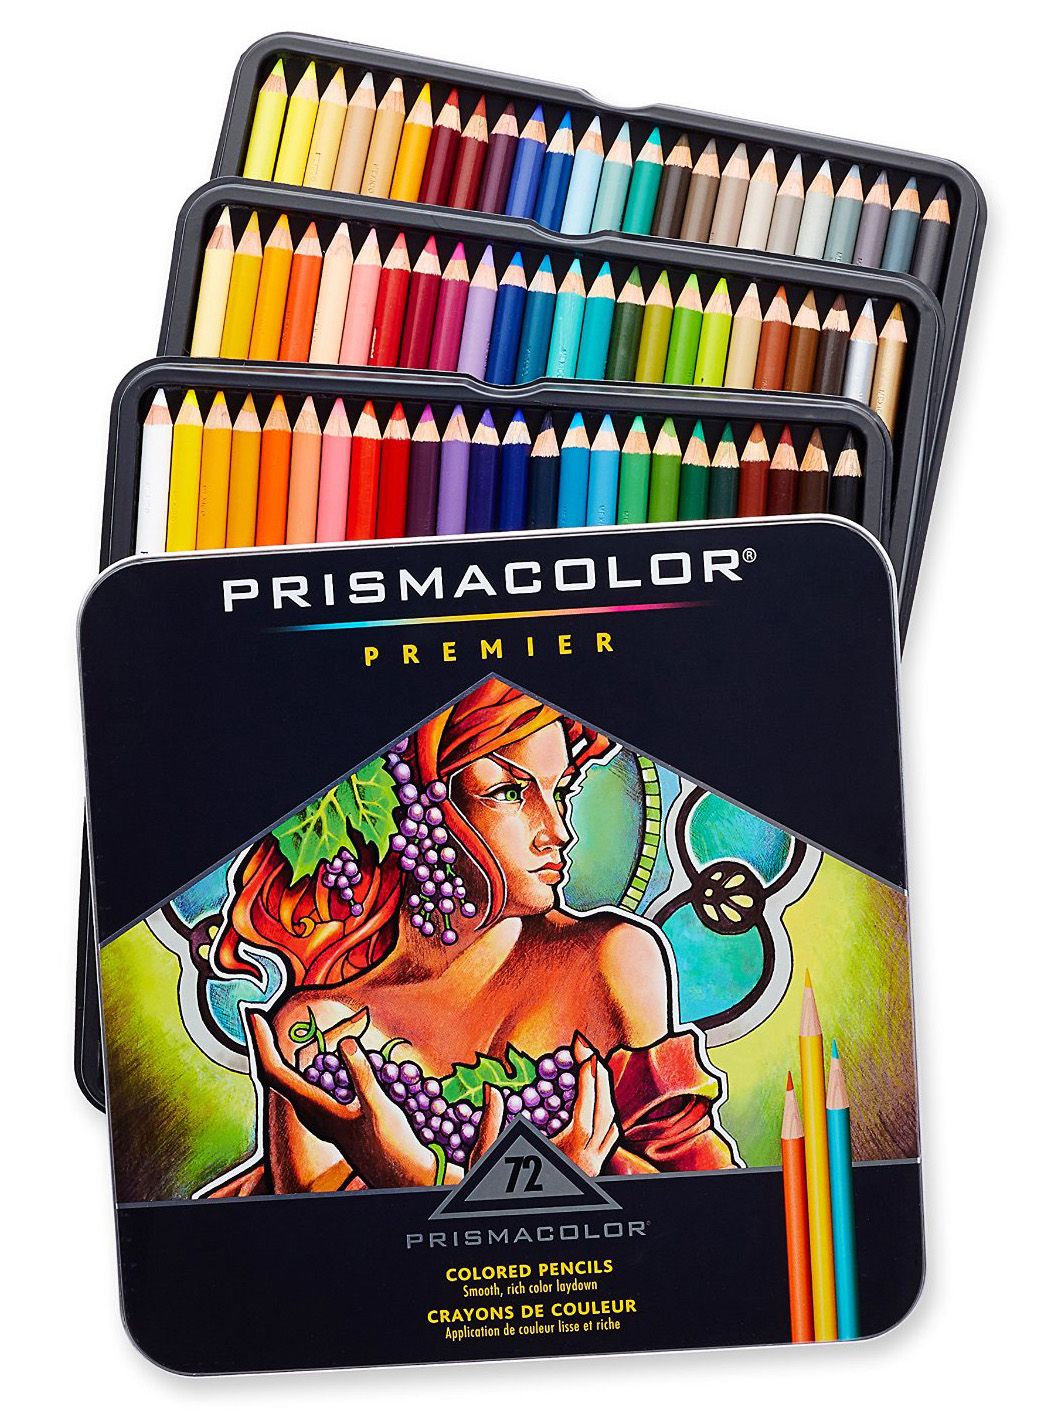 Prismacolor Artist Grade Colored Pencil (24 Pack)